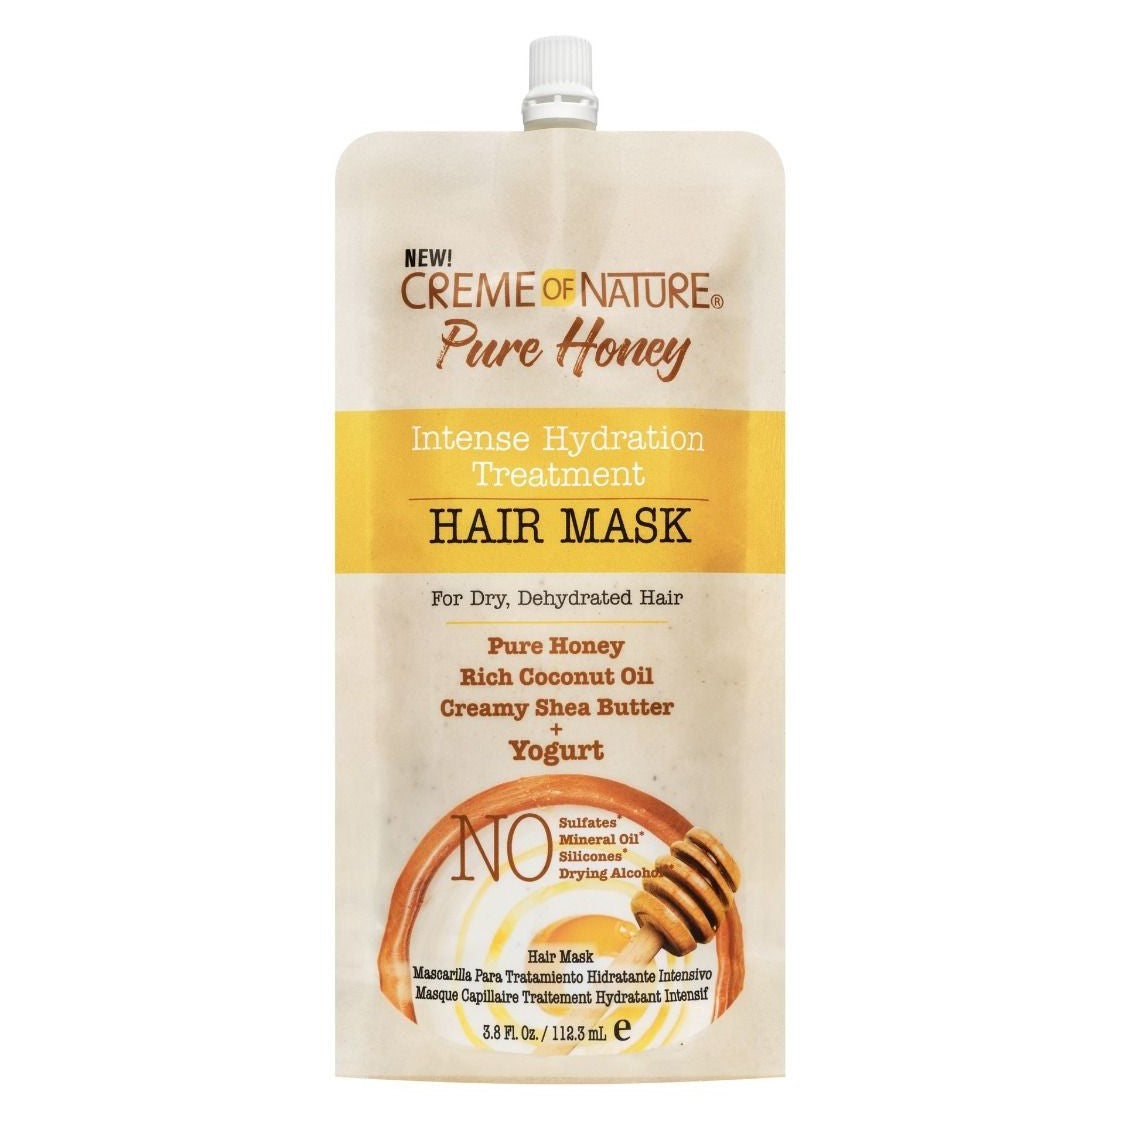 Creme of Nature Pure Honey Intense Hydration Treatment Hair Mask - Yoghurt 3.8oz